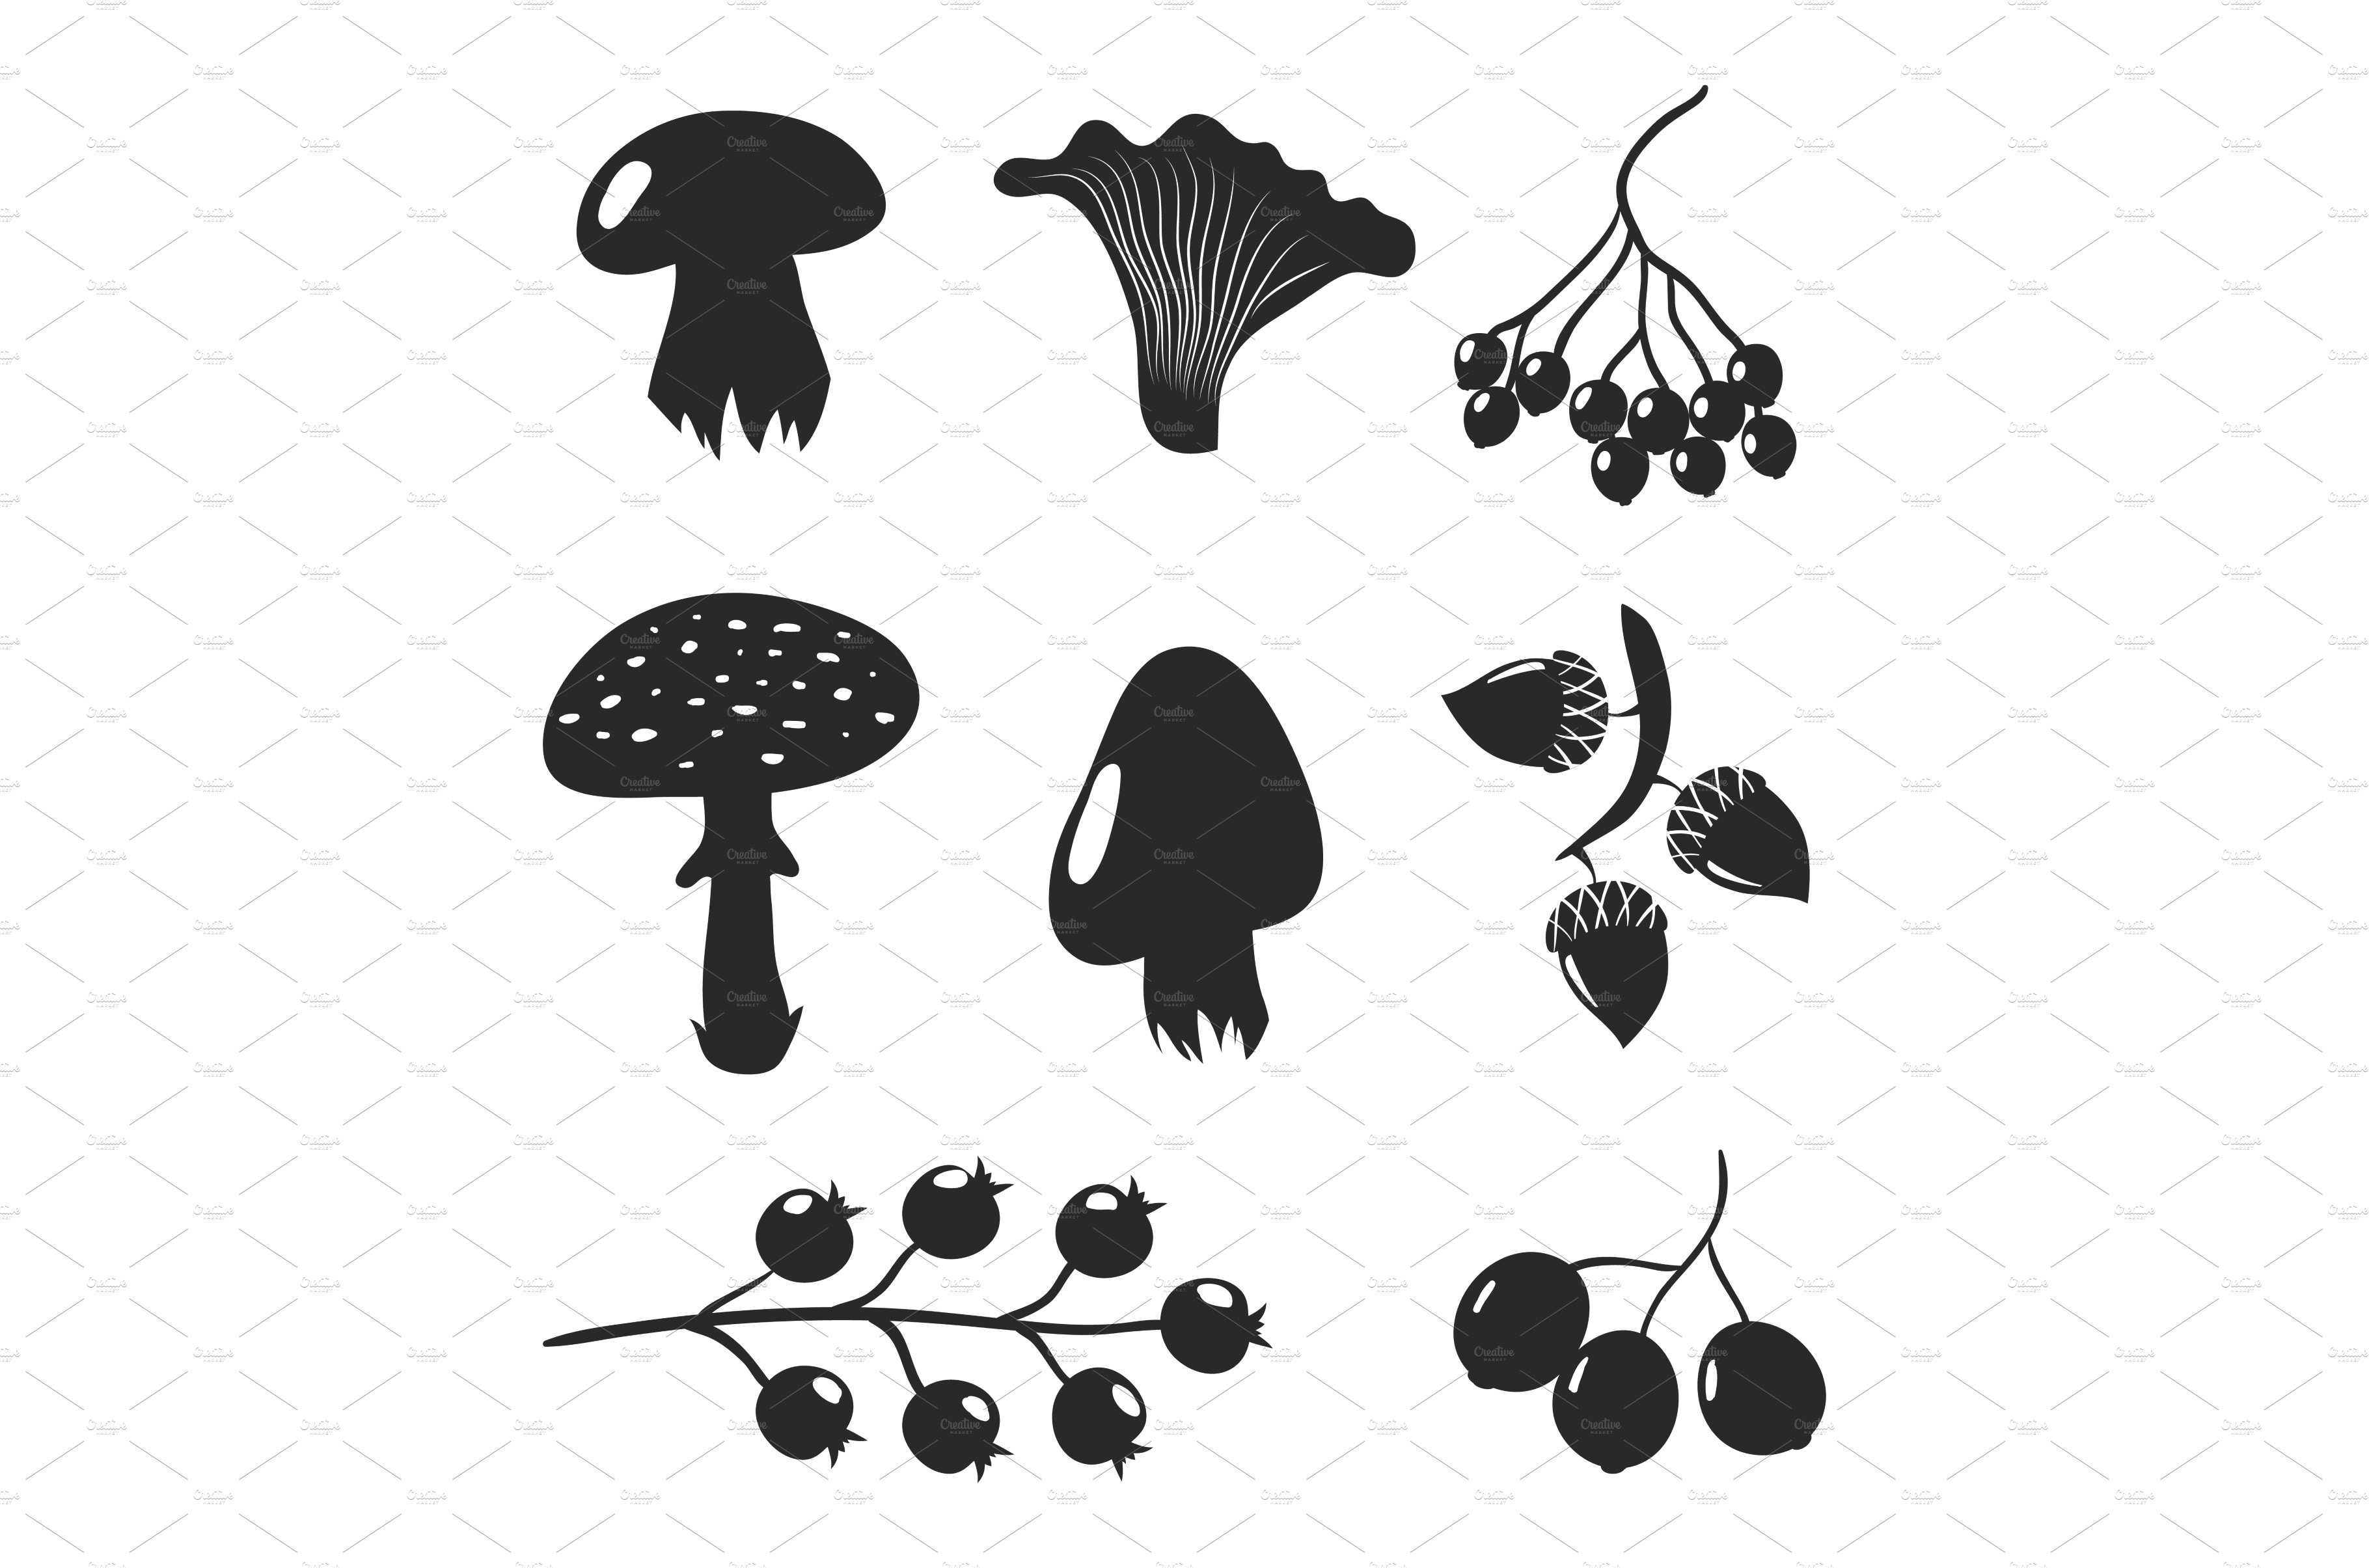 Mushrooms and berries black cover image.